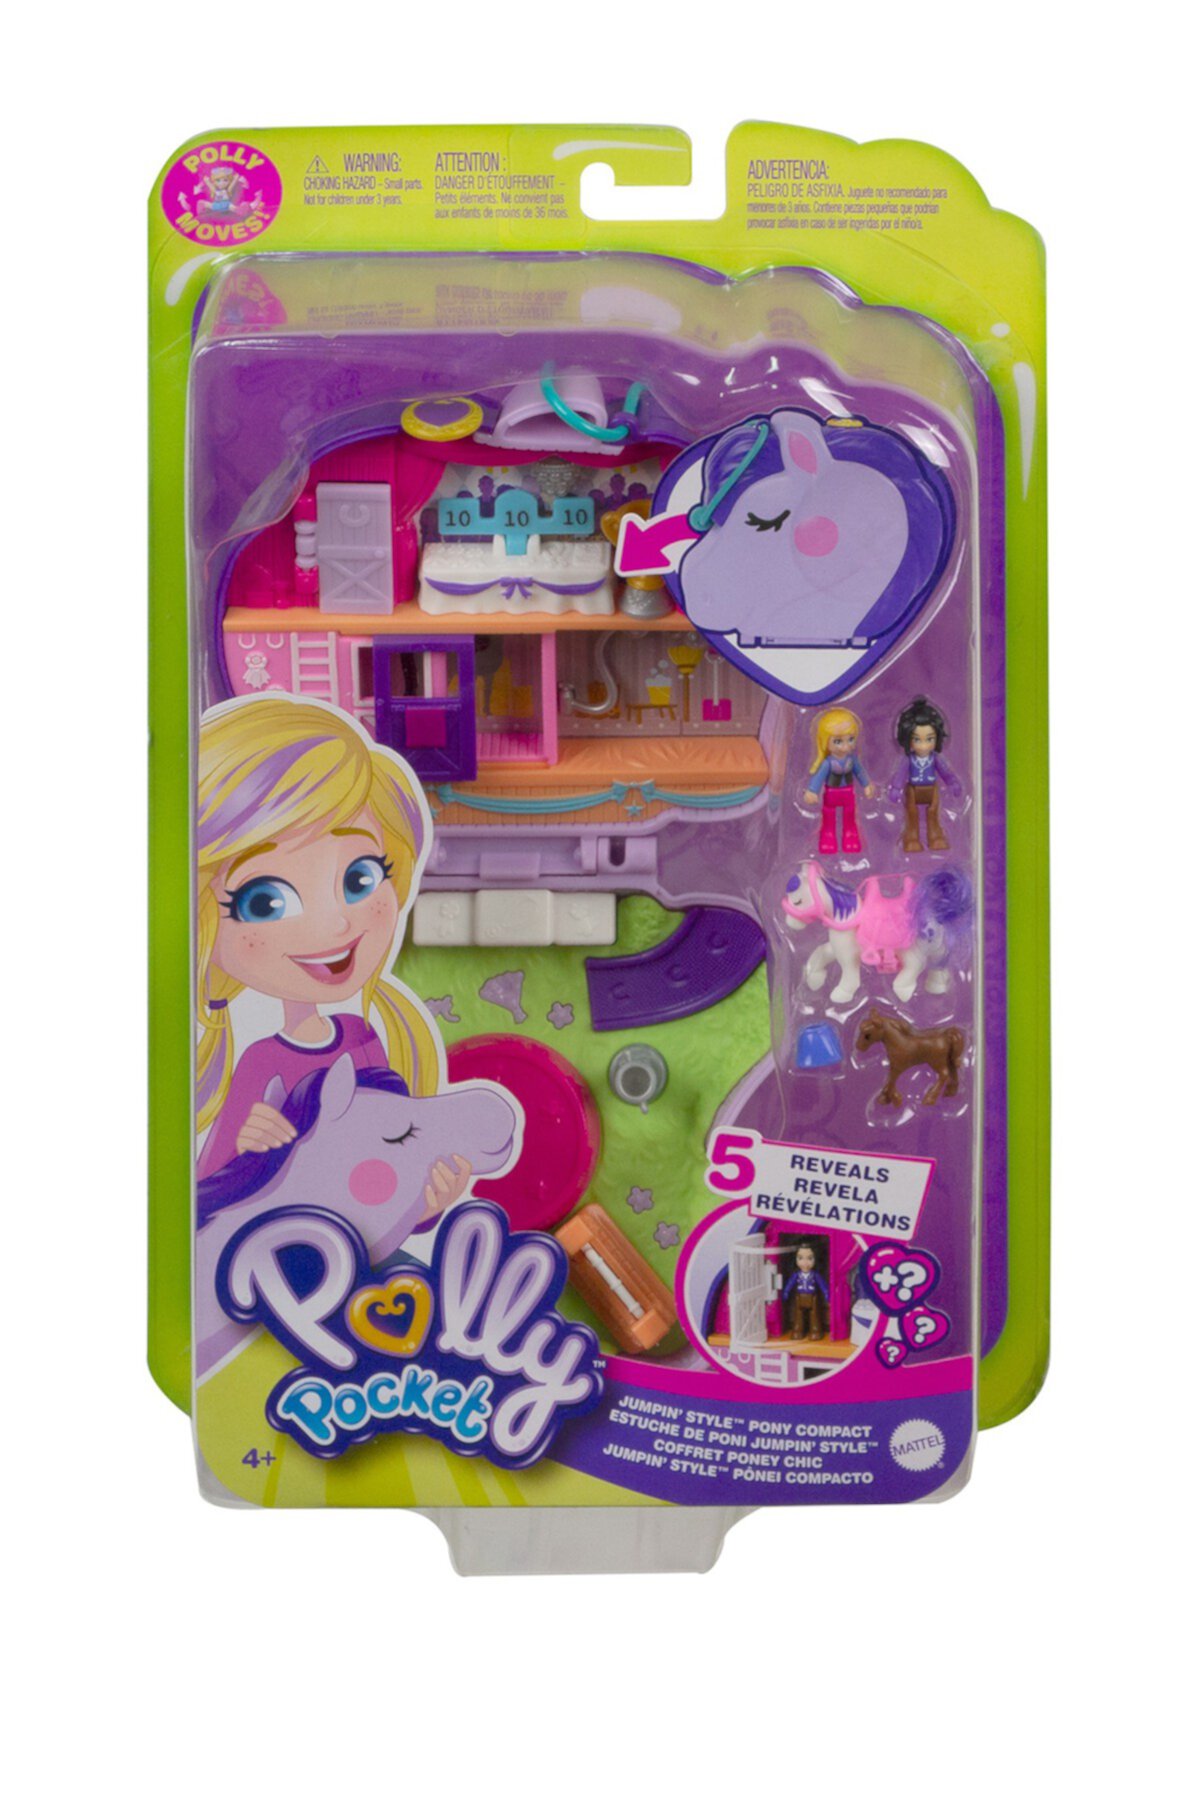 Polly Pocket (TM) Jumpin 'Style (TM) Пони Компактный Mattel